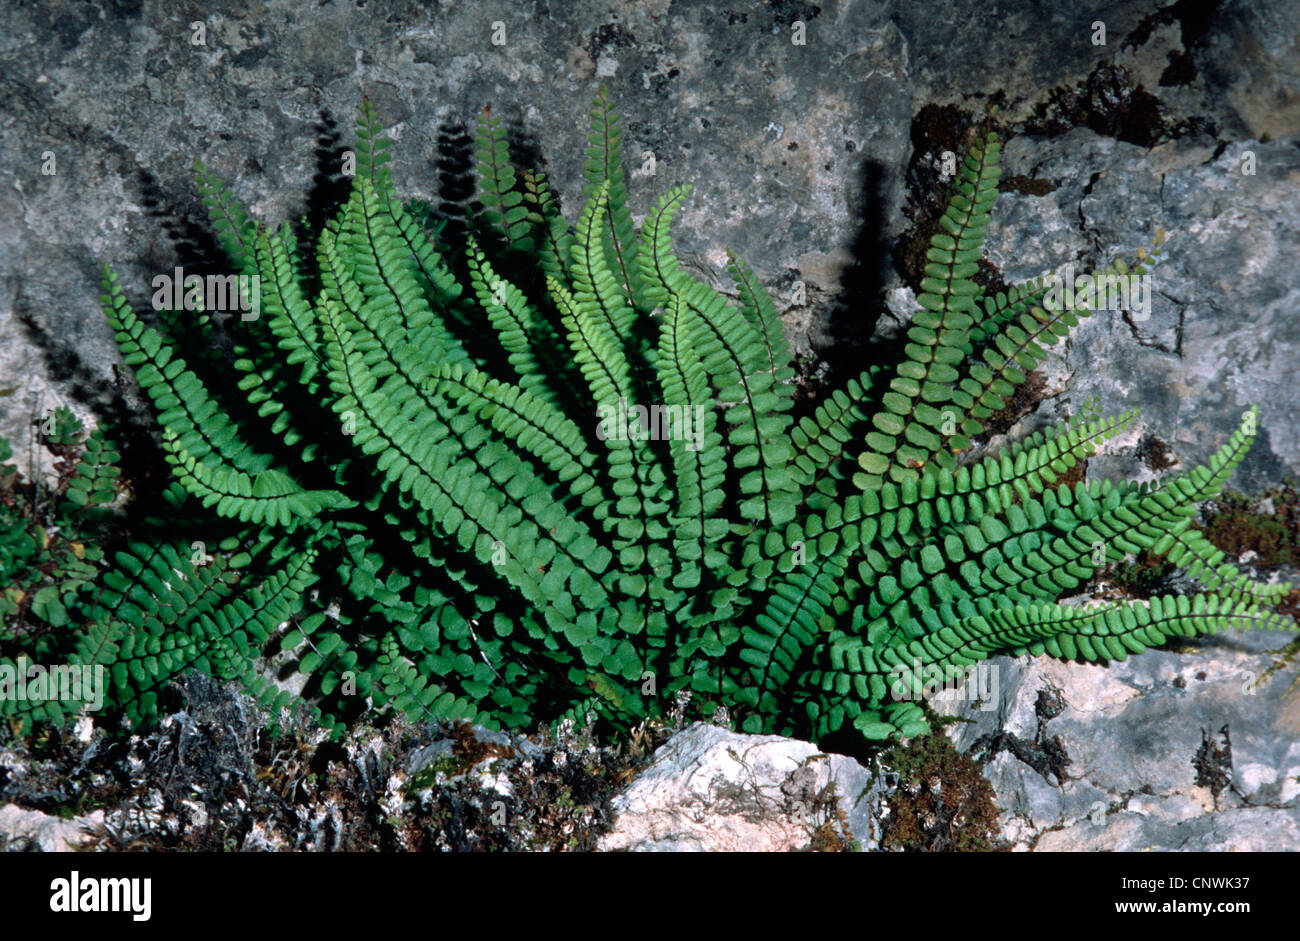 maidenhair spleenwort, common maidenhair (Asplenium trichomanes), in a rock crevice, Germany Stock Photo